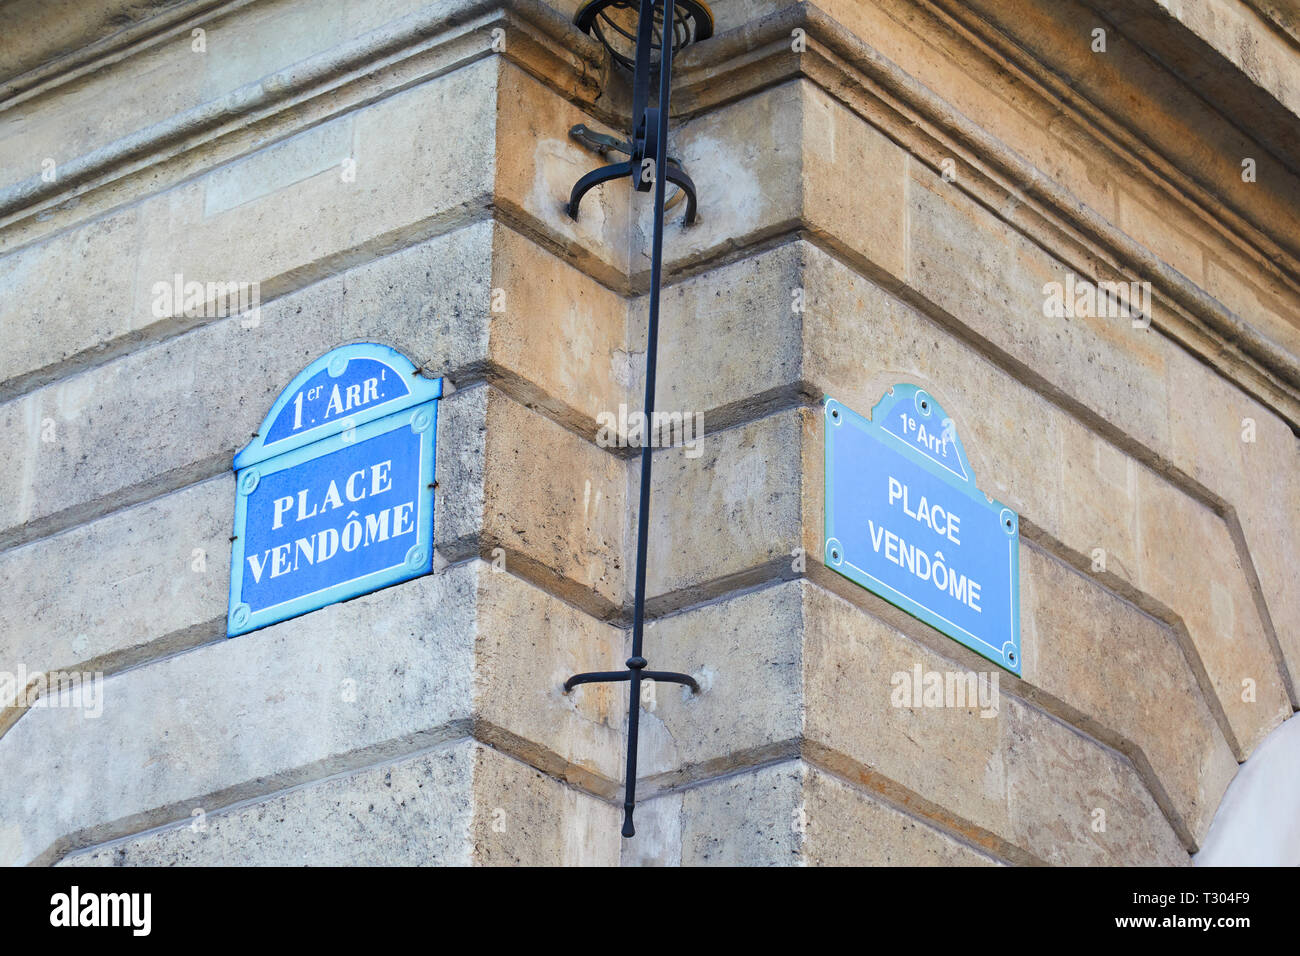 La famosa Place Vendome, esquina con la calle signos en Paris, Francia Foto de stock